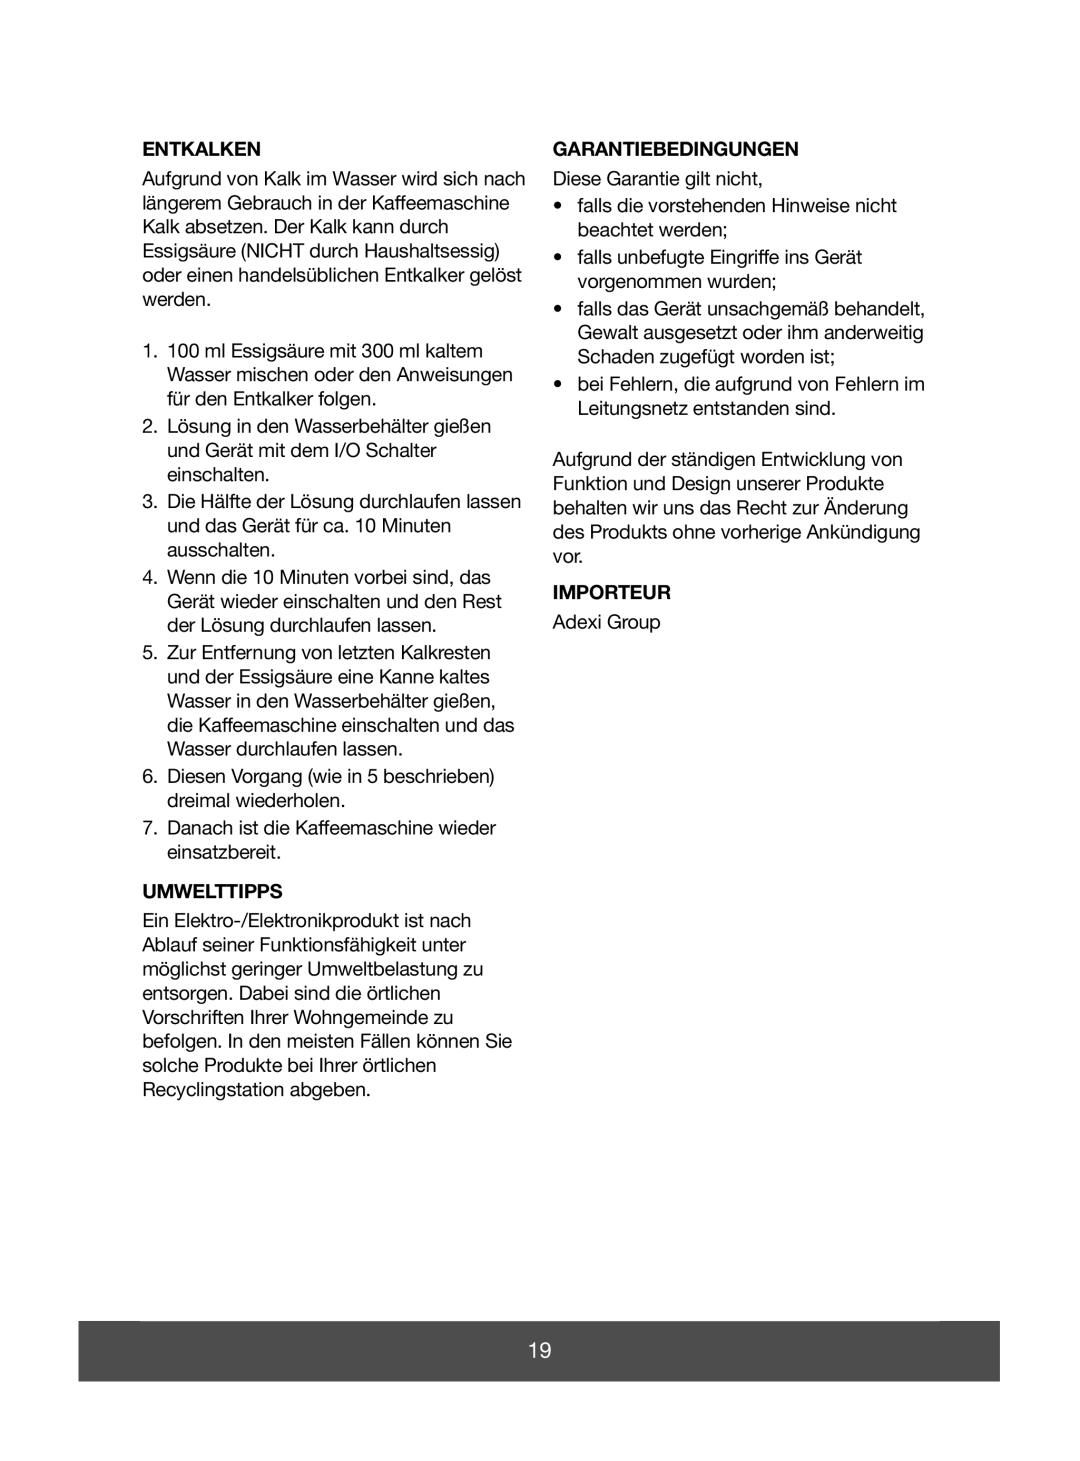 Melissa 645-085 manual Entkalken, Umwelttipps, Garantiebedingungen, Importeur 